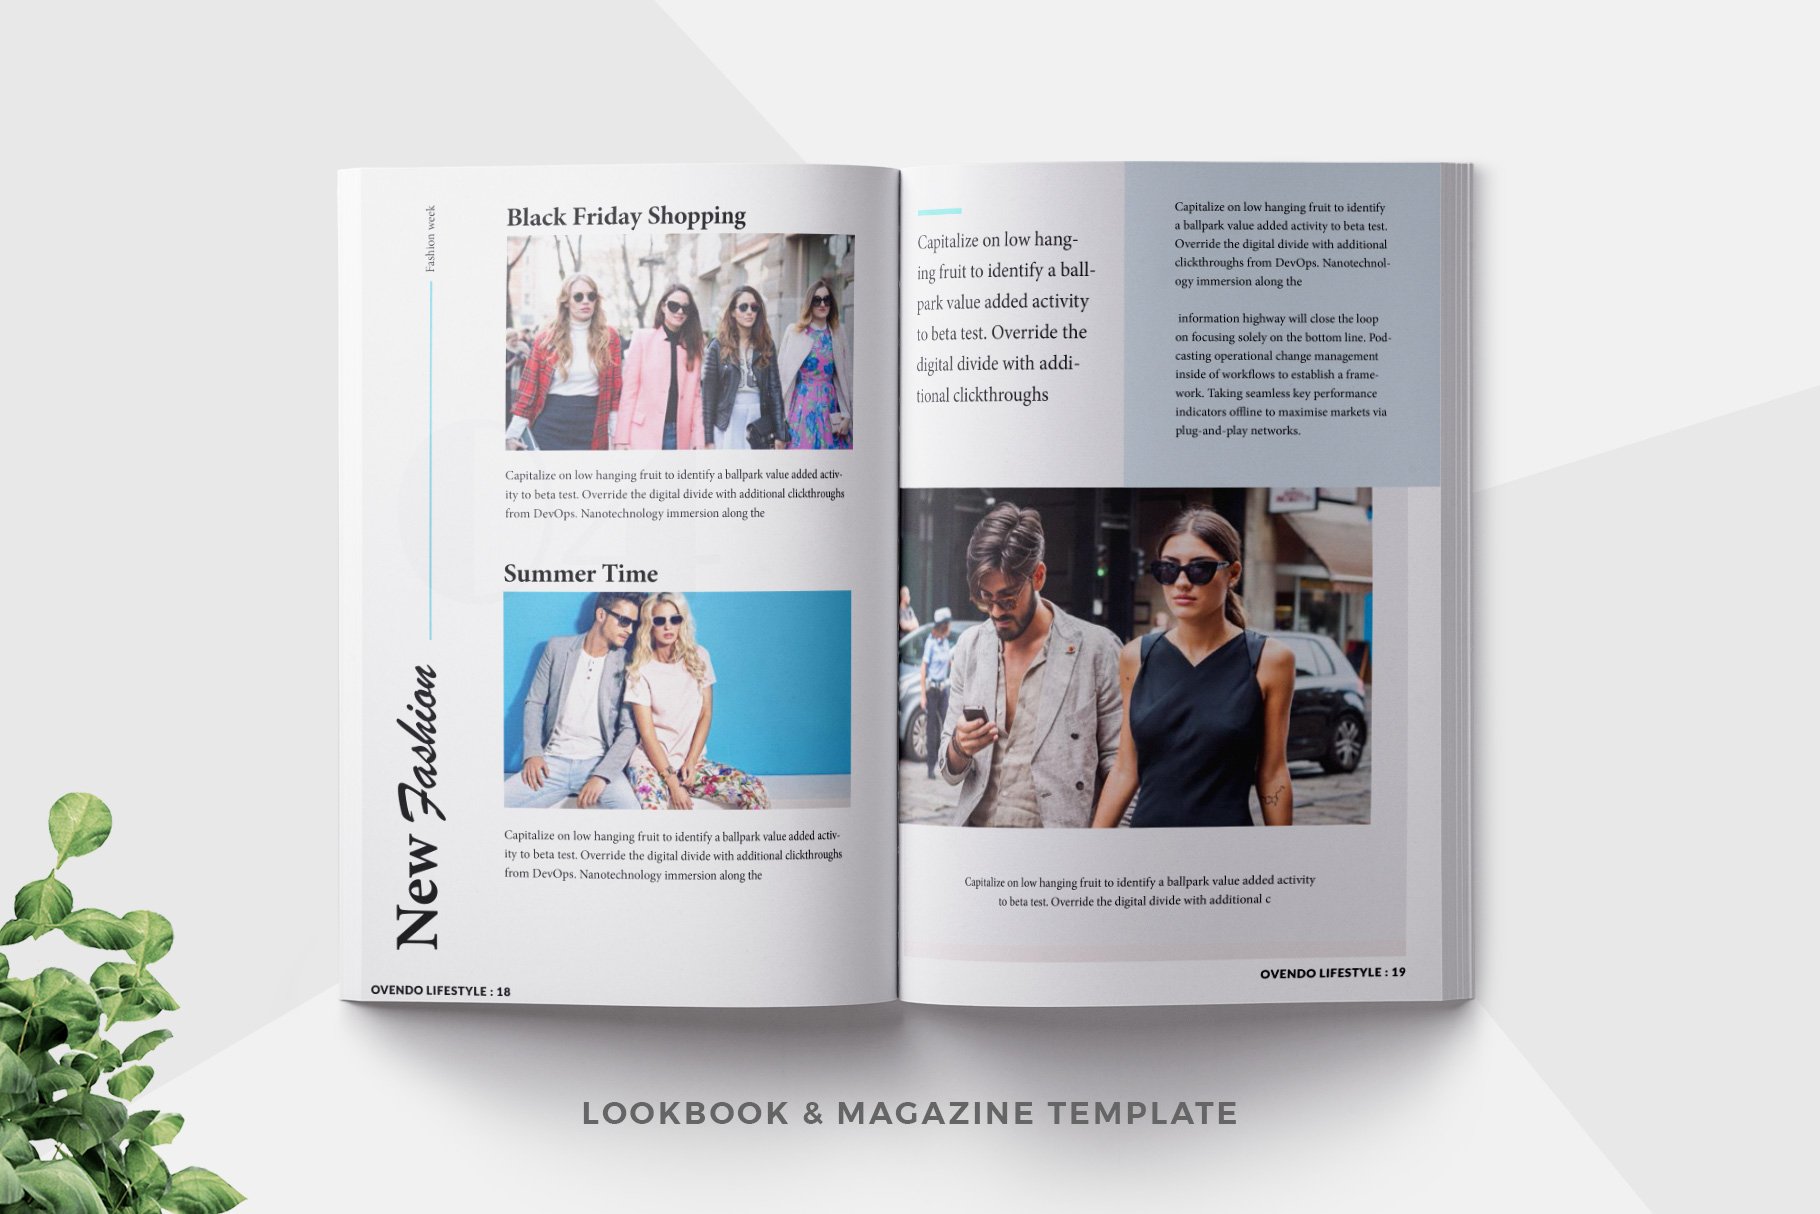 Lifestyle Magazine Lookbook Template cover image.